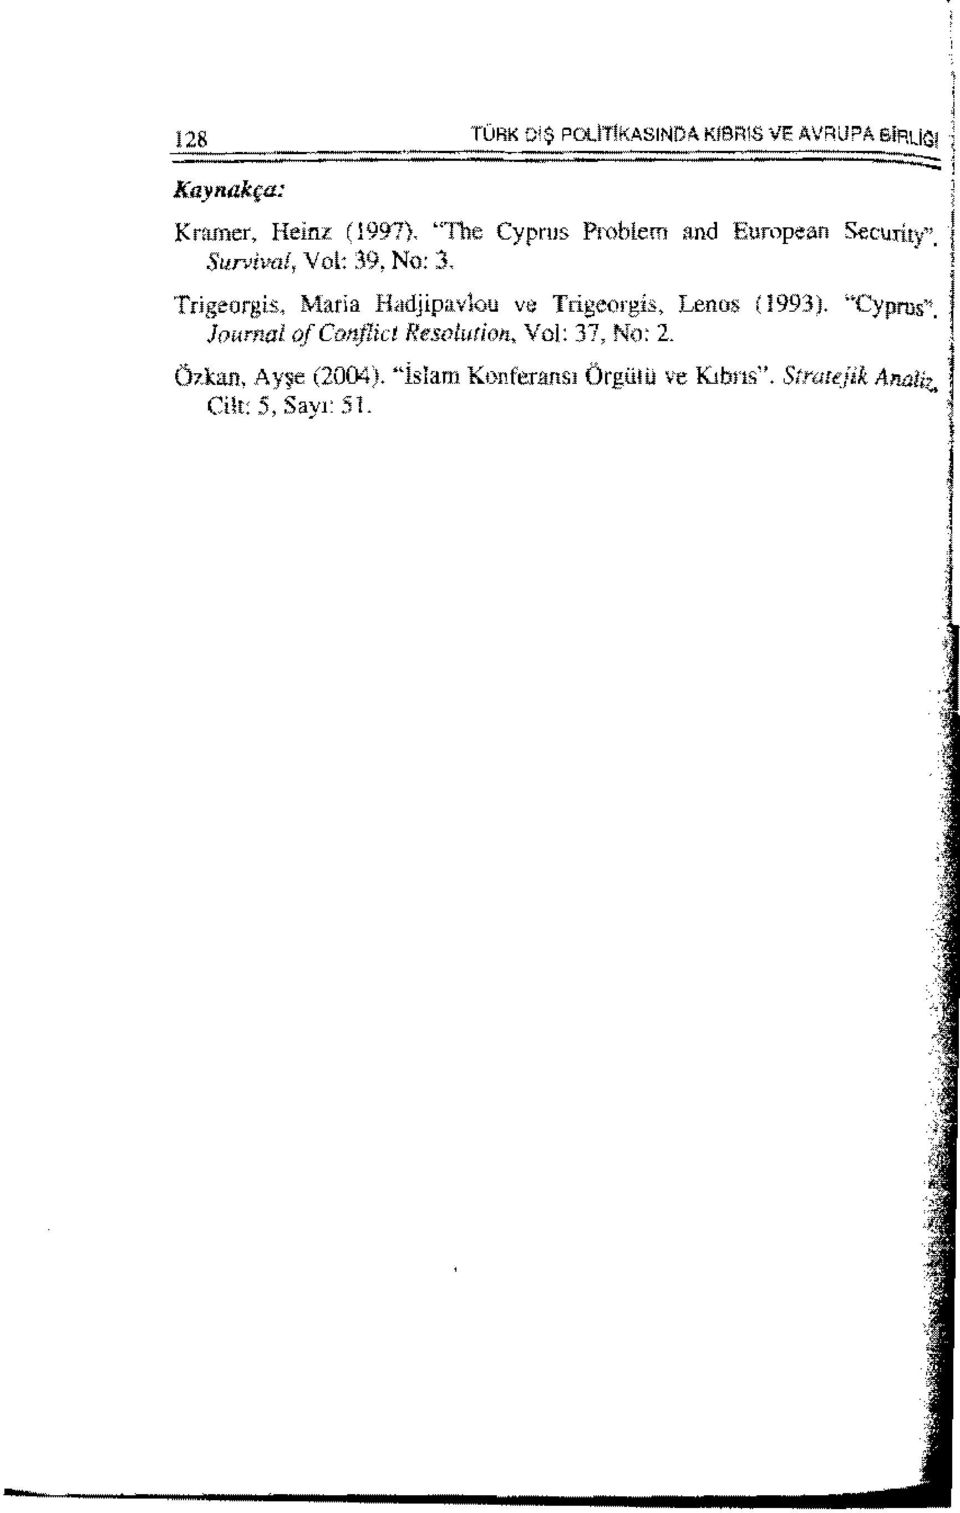 1ival, Vol: 39, No: 3. Trigeorgis, Marla Hadjipavlou vu Trigeorgis, Lenos ( 1993). "Cyprus".